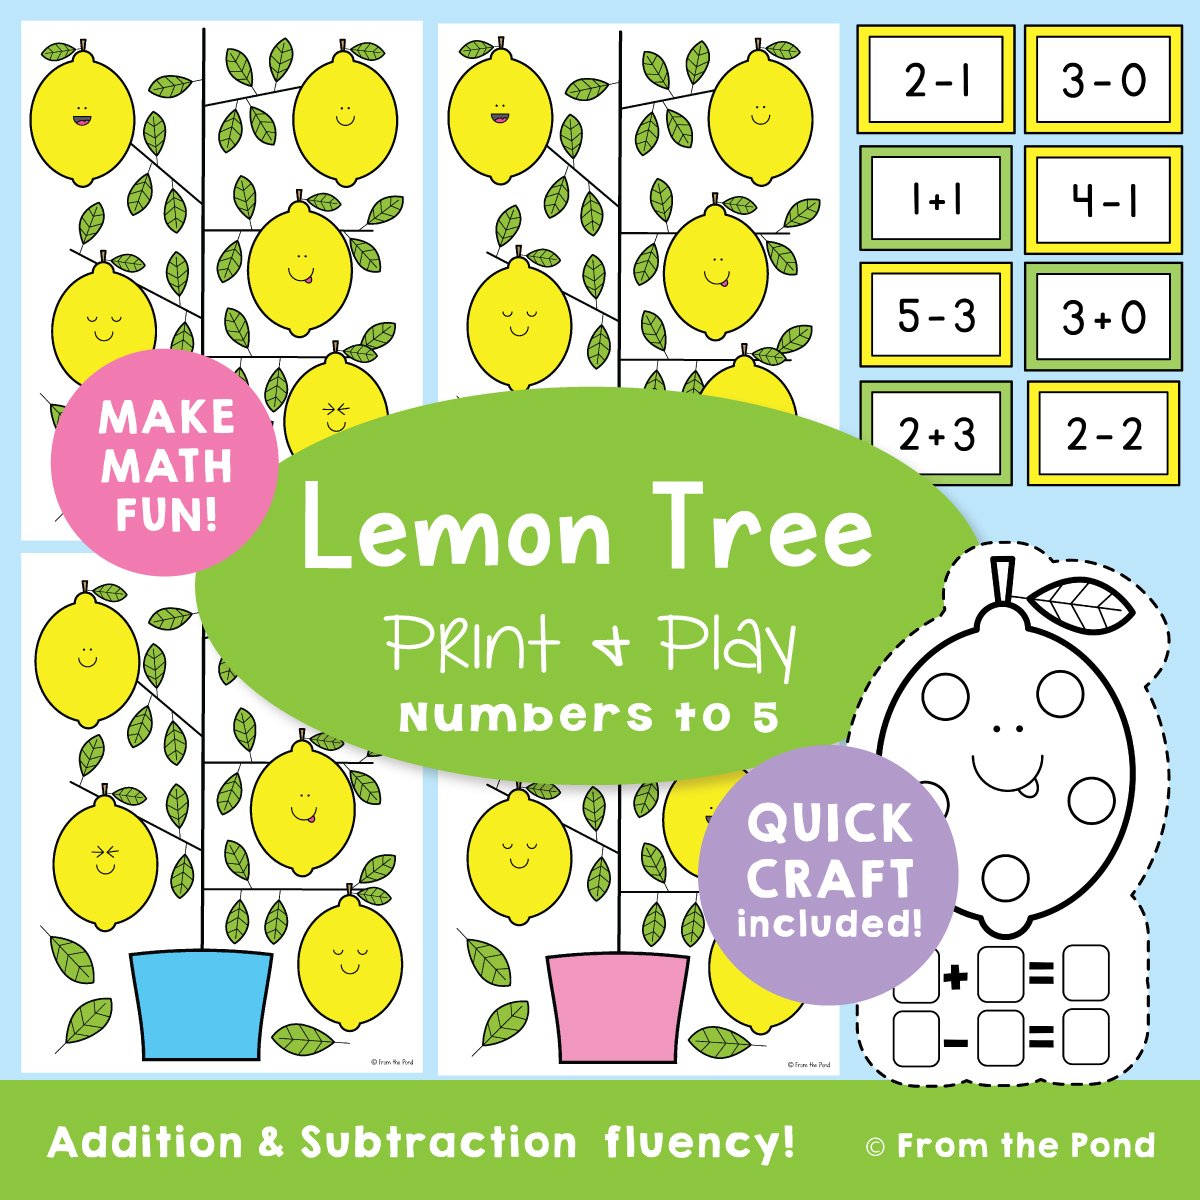 lemon-tree-pic-01.jpg